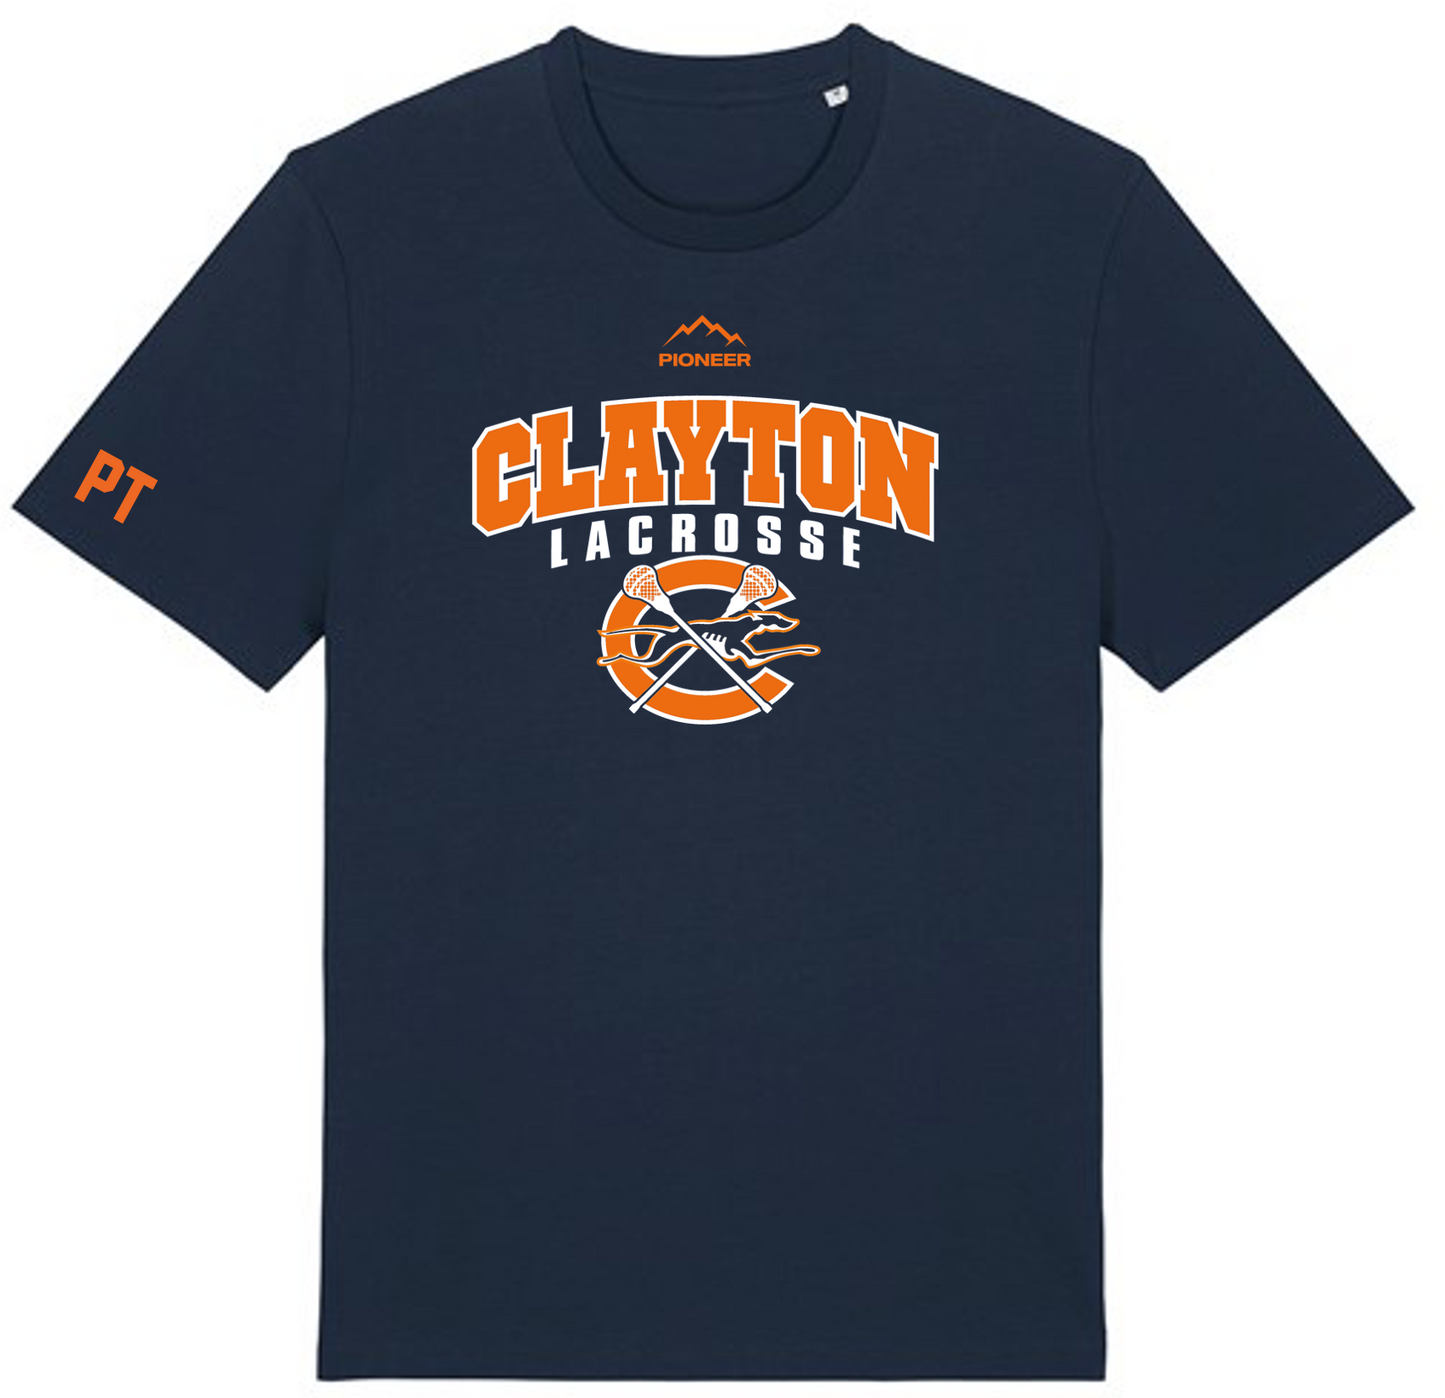 Clayton Lacrosse Organic Cotton T-Shirt